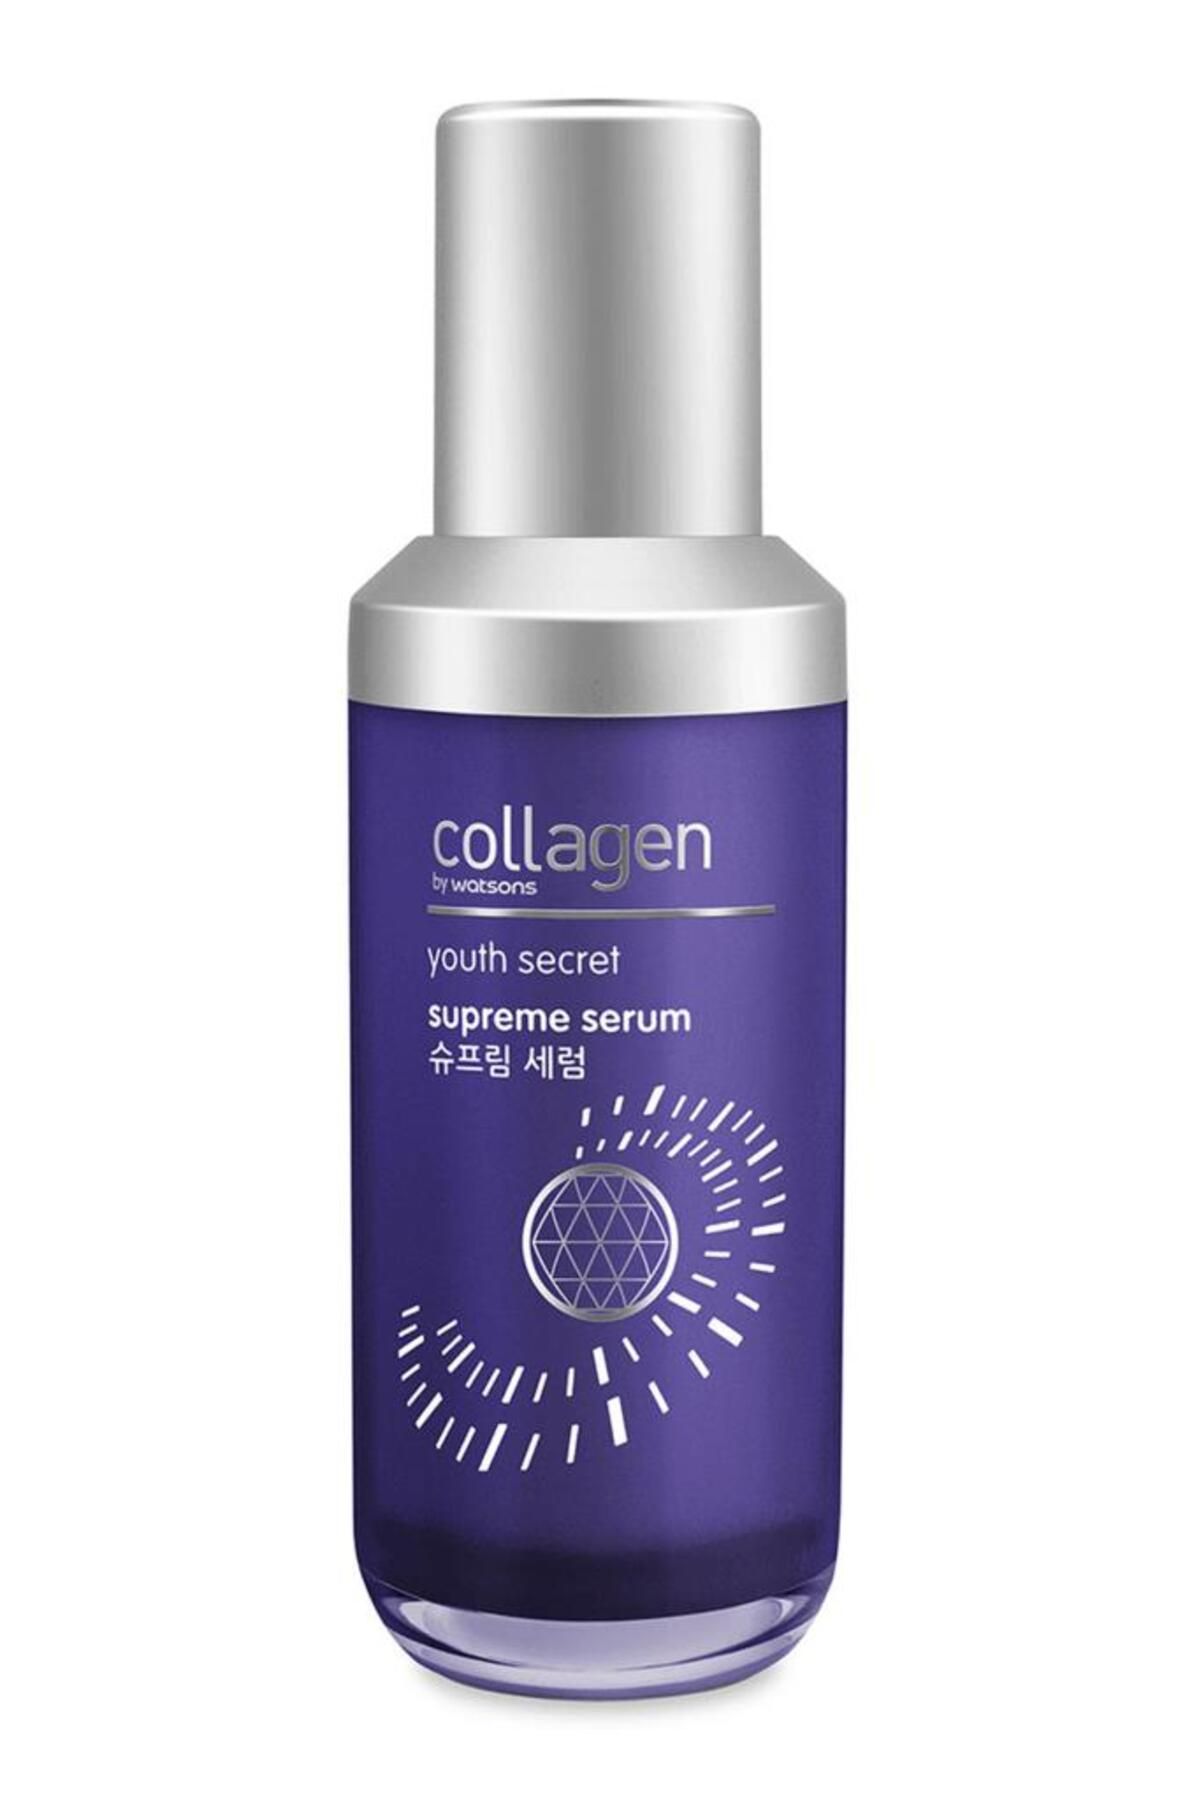 Collagen by Watsons Youth Secret Yoğun Serum 35 ml